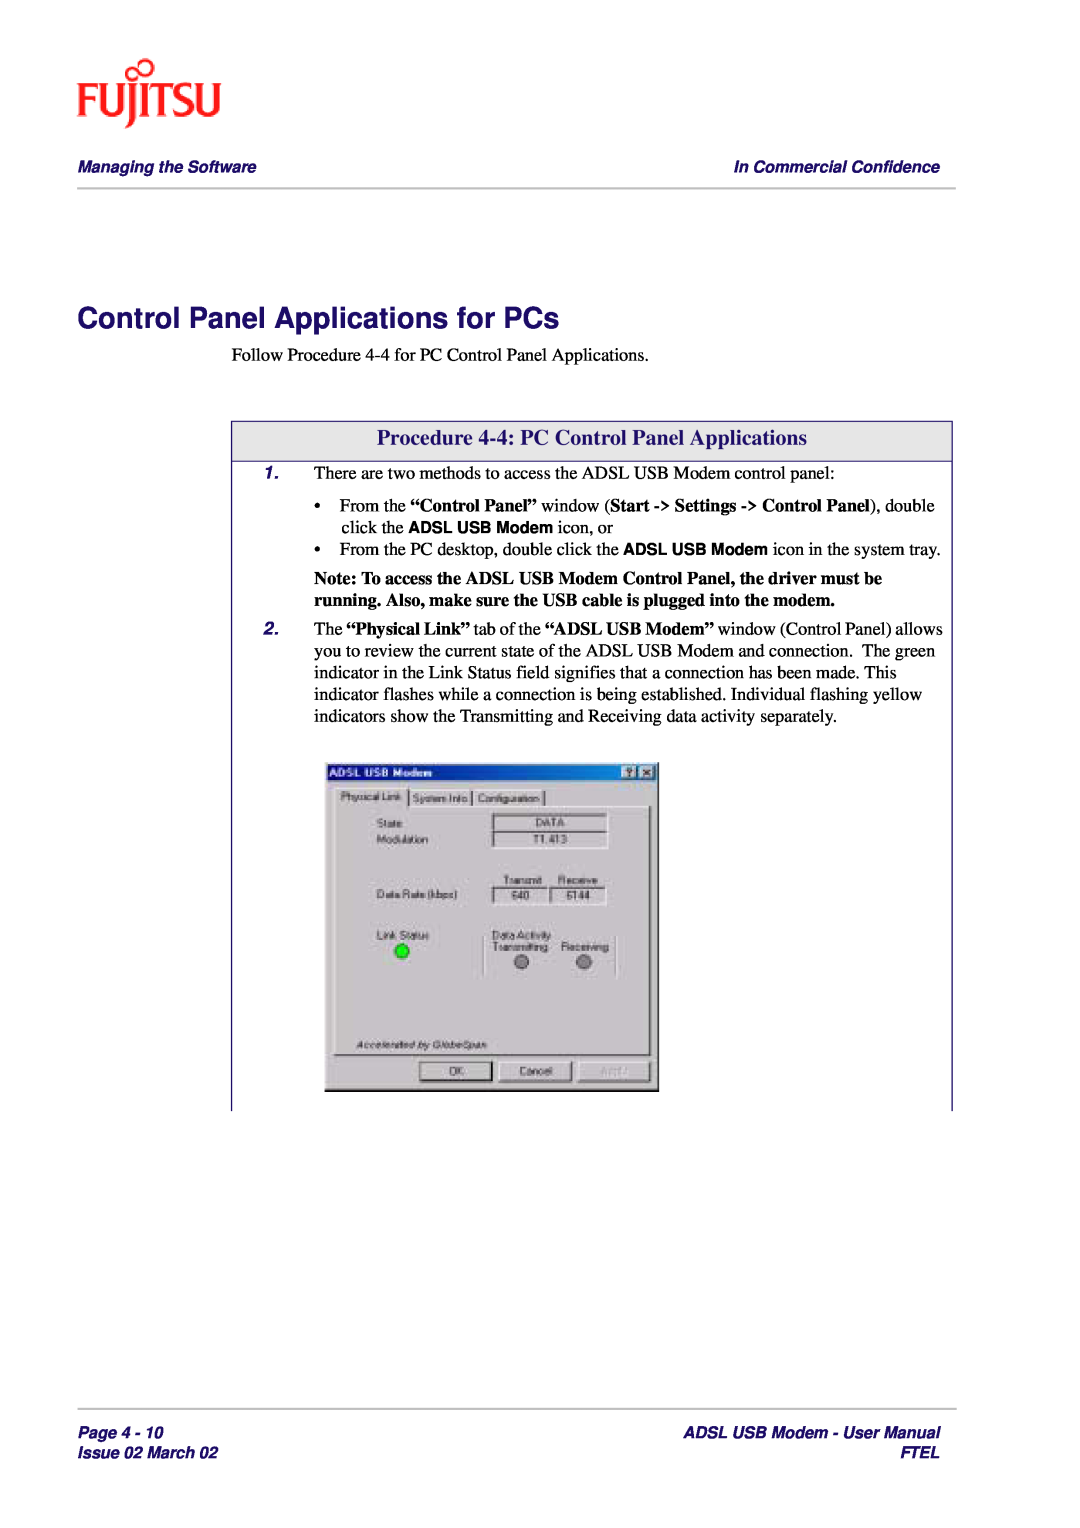 Fujitsu 3XAX-00803AAS user manual Control Panel Applications for PCs, Procedure 4-4 PC Control Panel Applications 